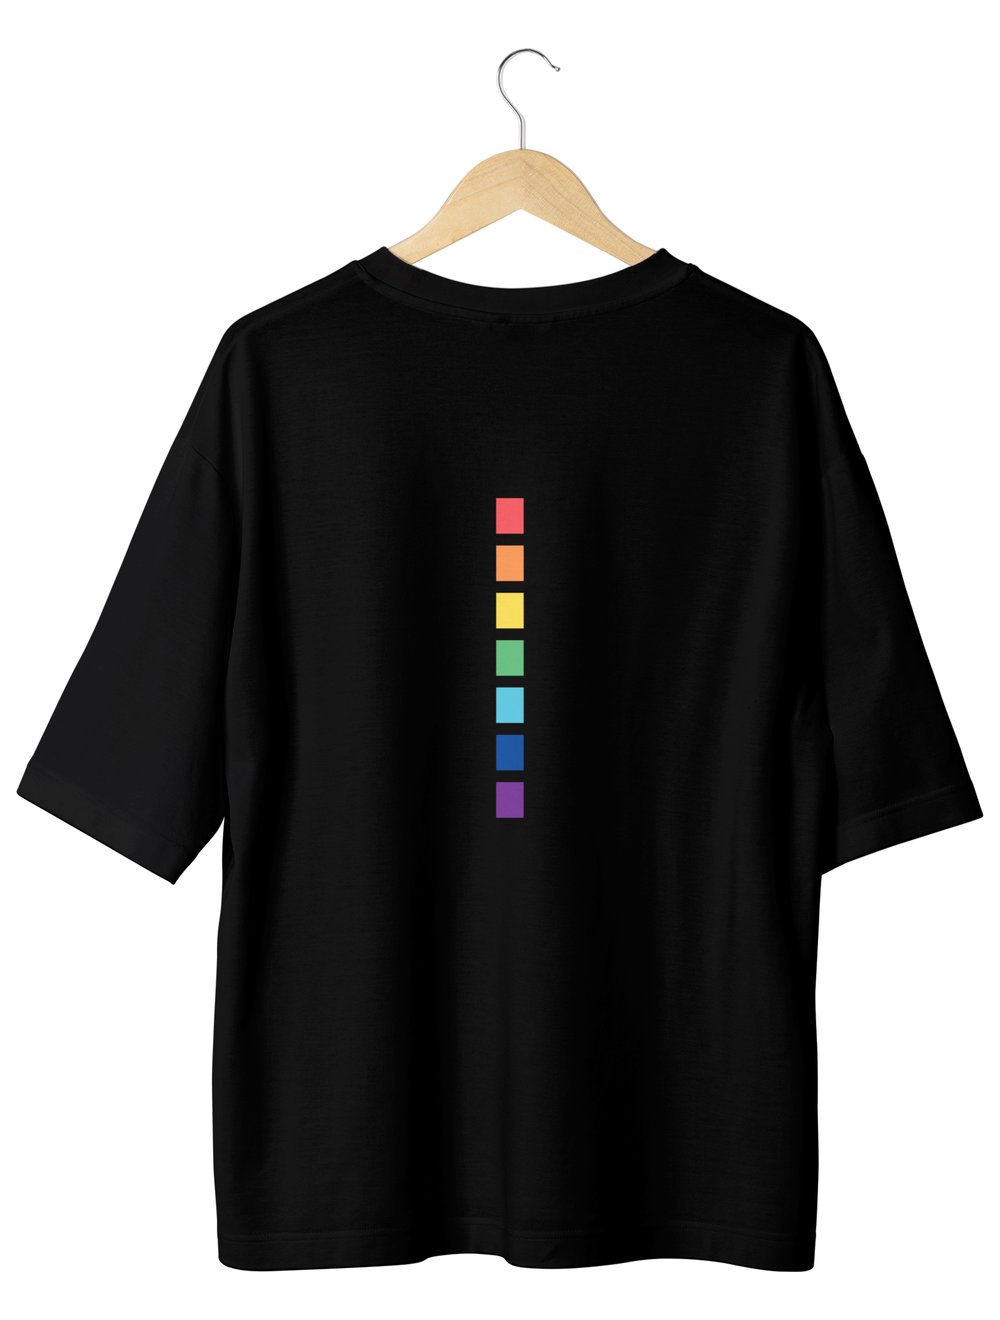 Velev Oversize Pride T-Shirt